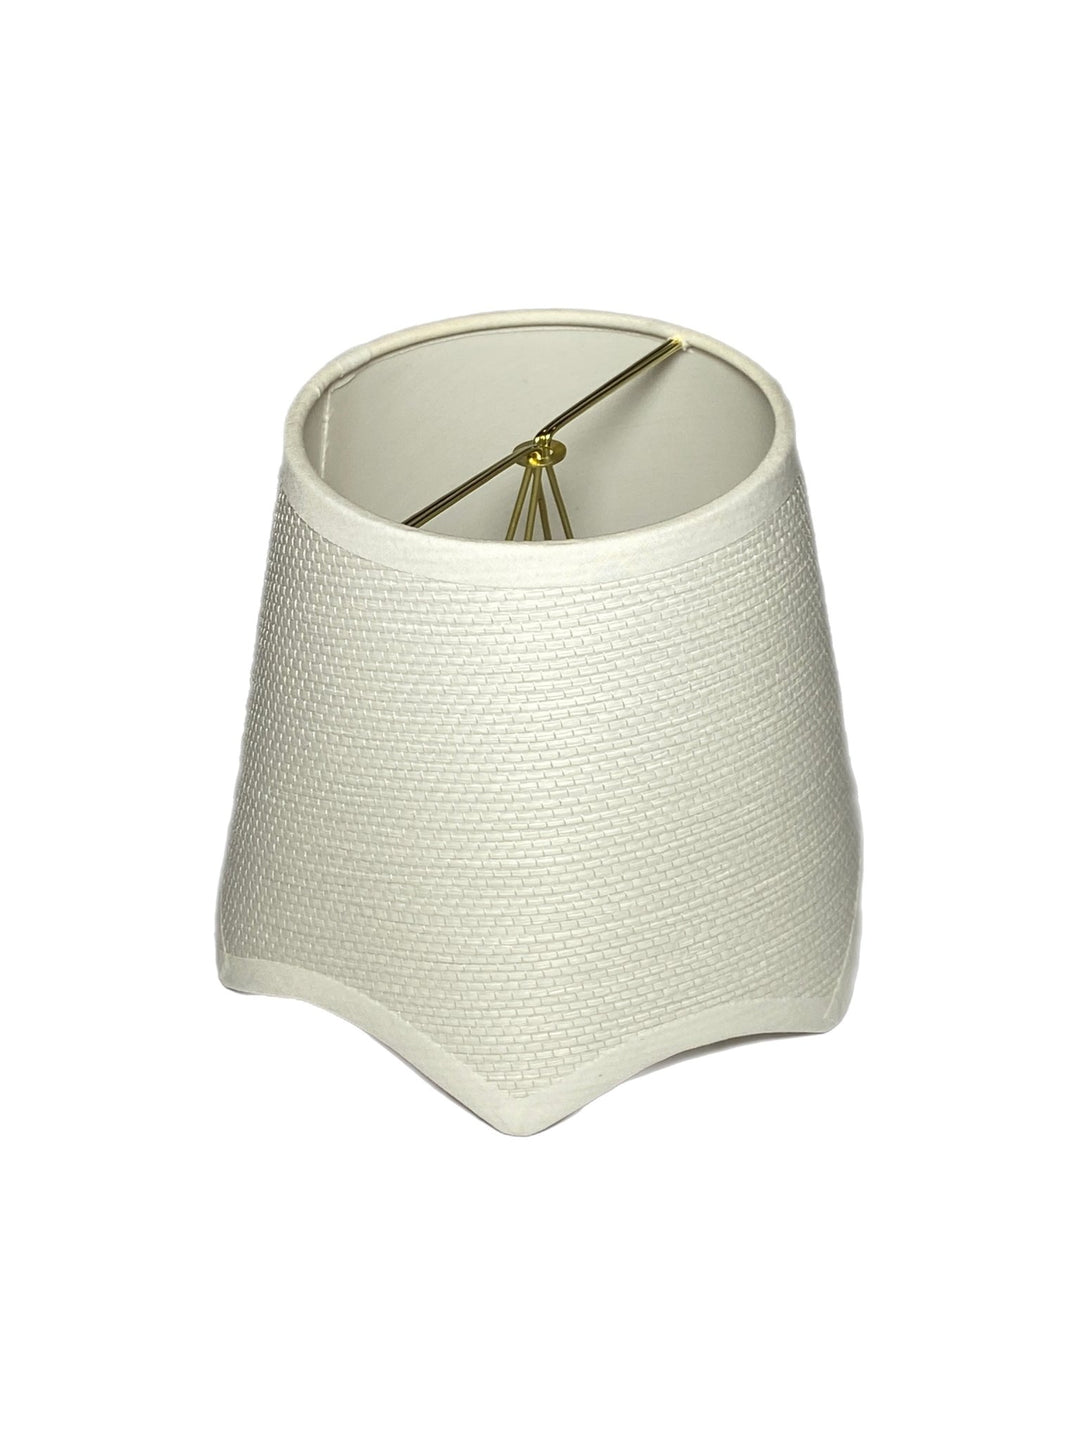 White Raffia Hardback Scalloped Lamp Shade *NEW* - Lux Lamp Shades